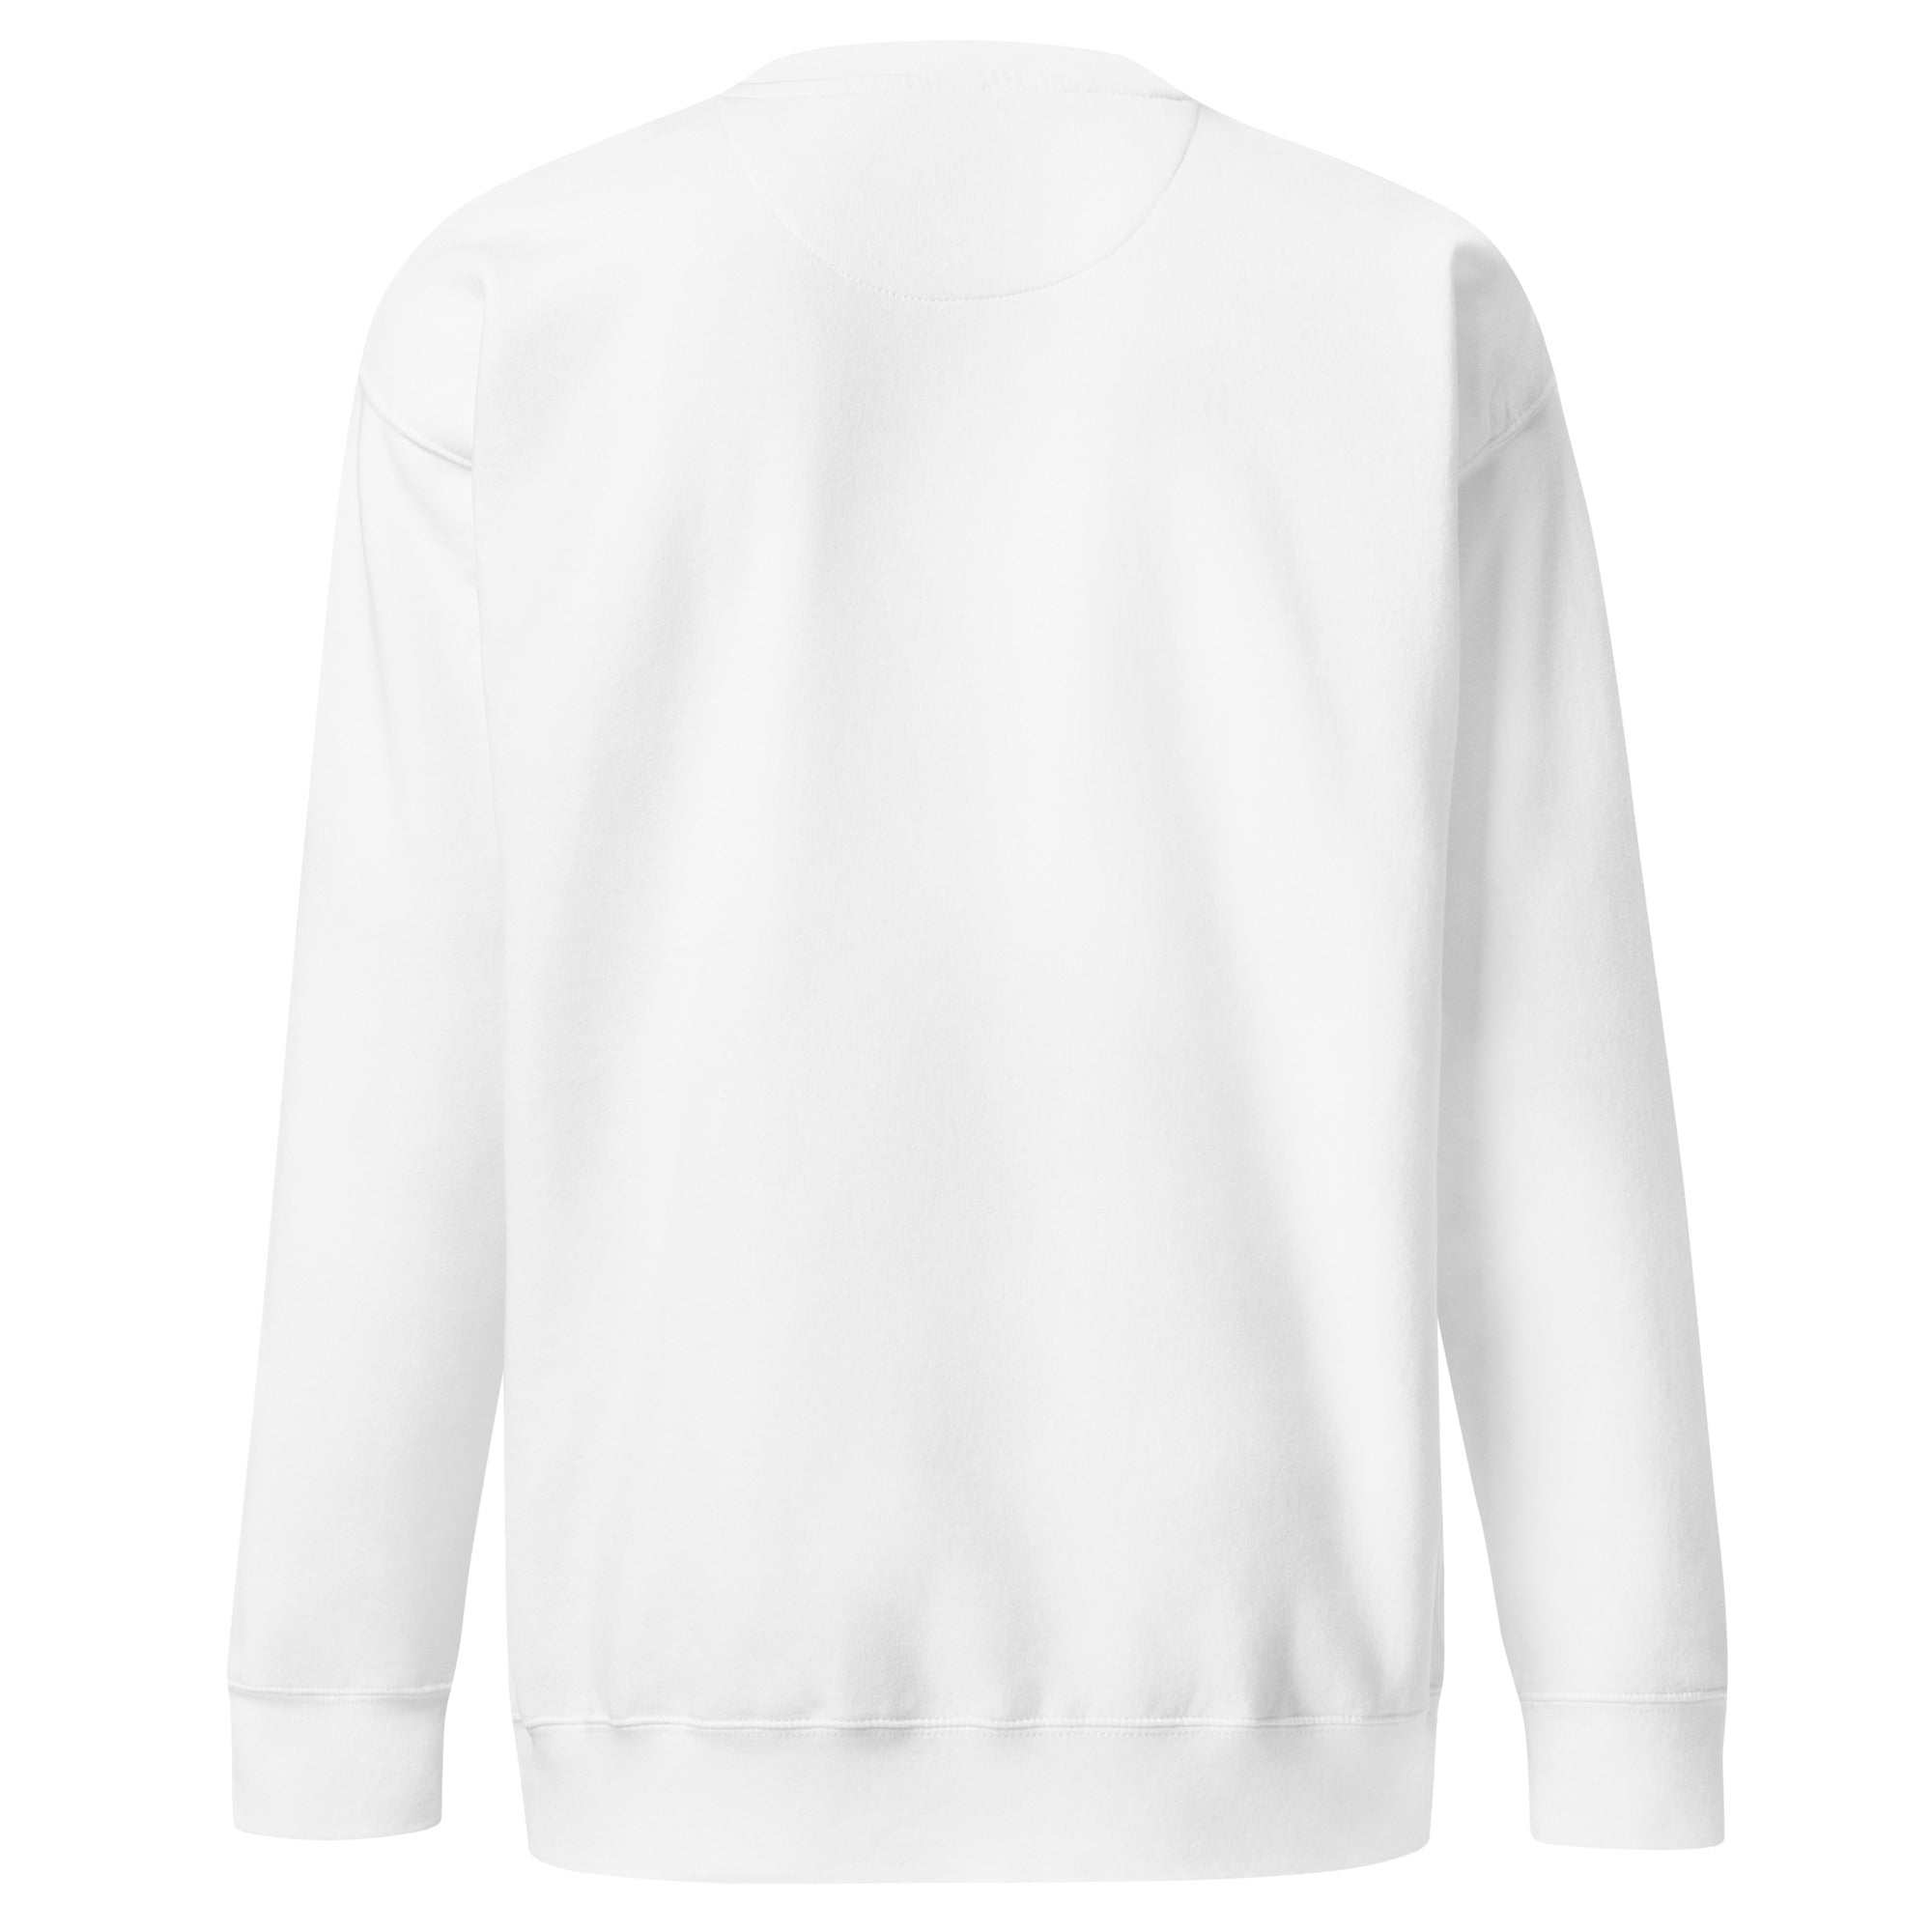 Unisex Premium Sweatshirt Authentic Skiing Cowboy large embroidered pattern